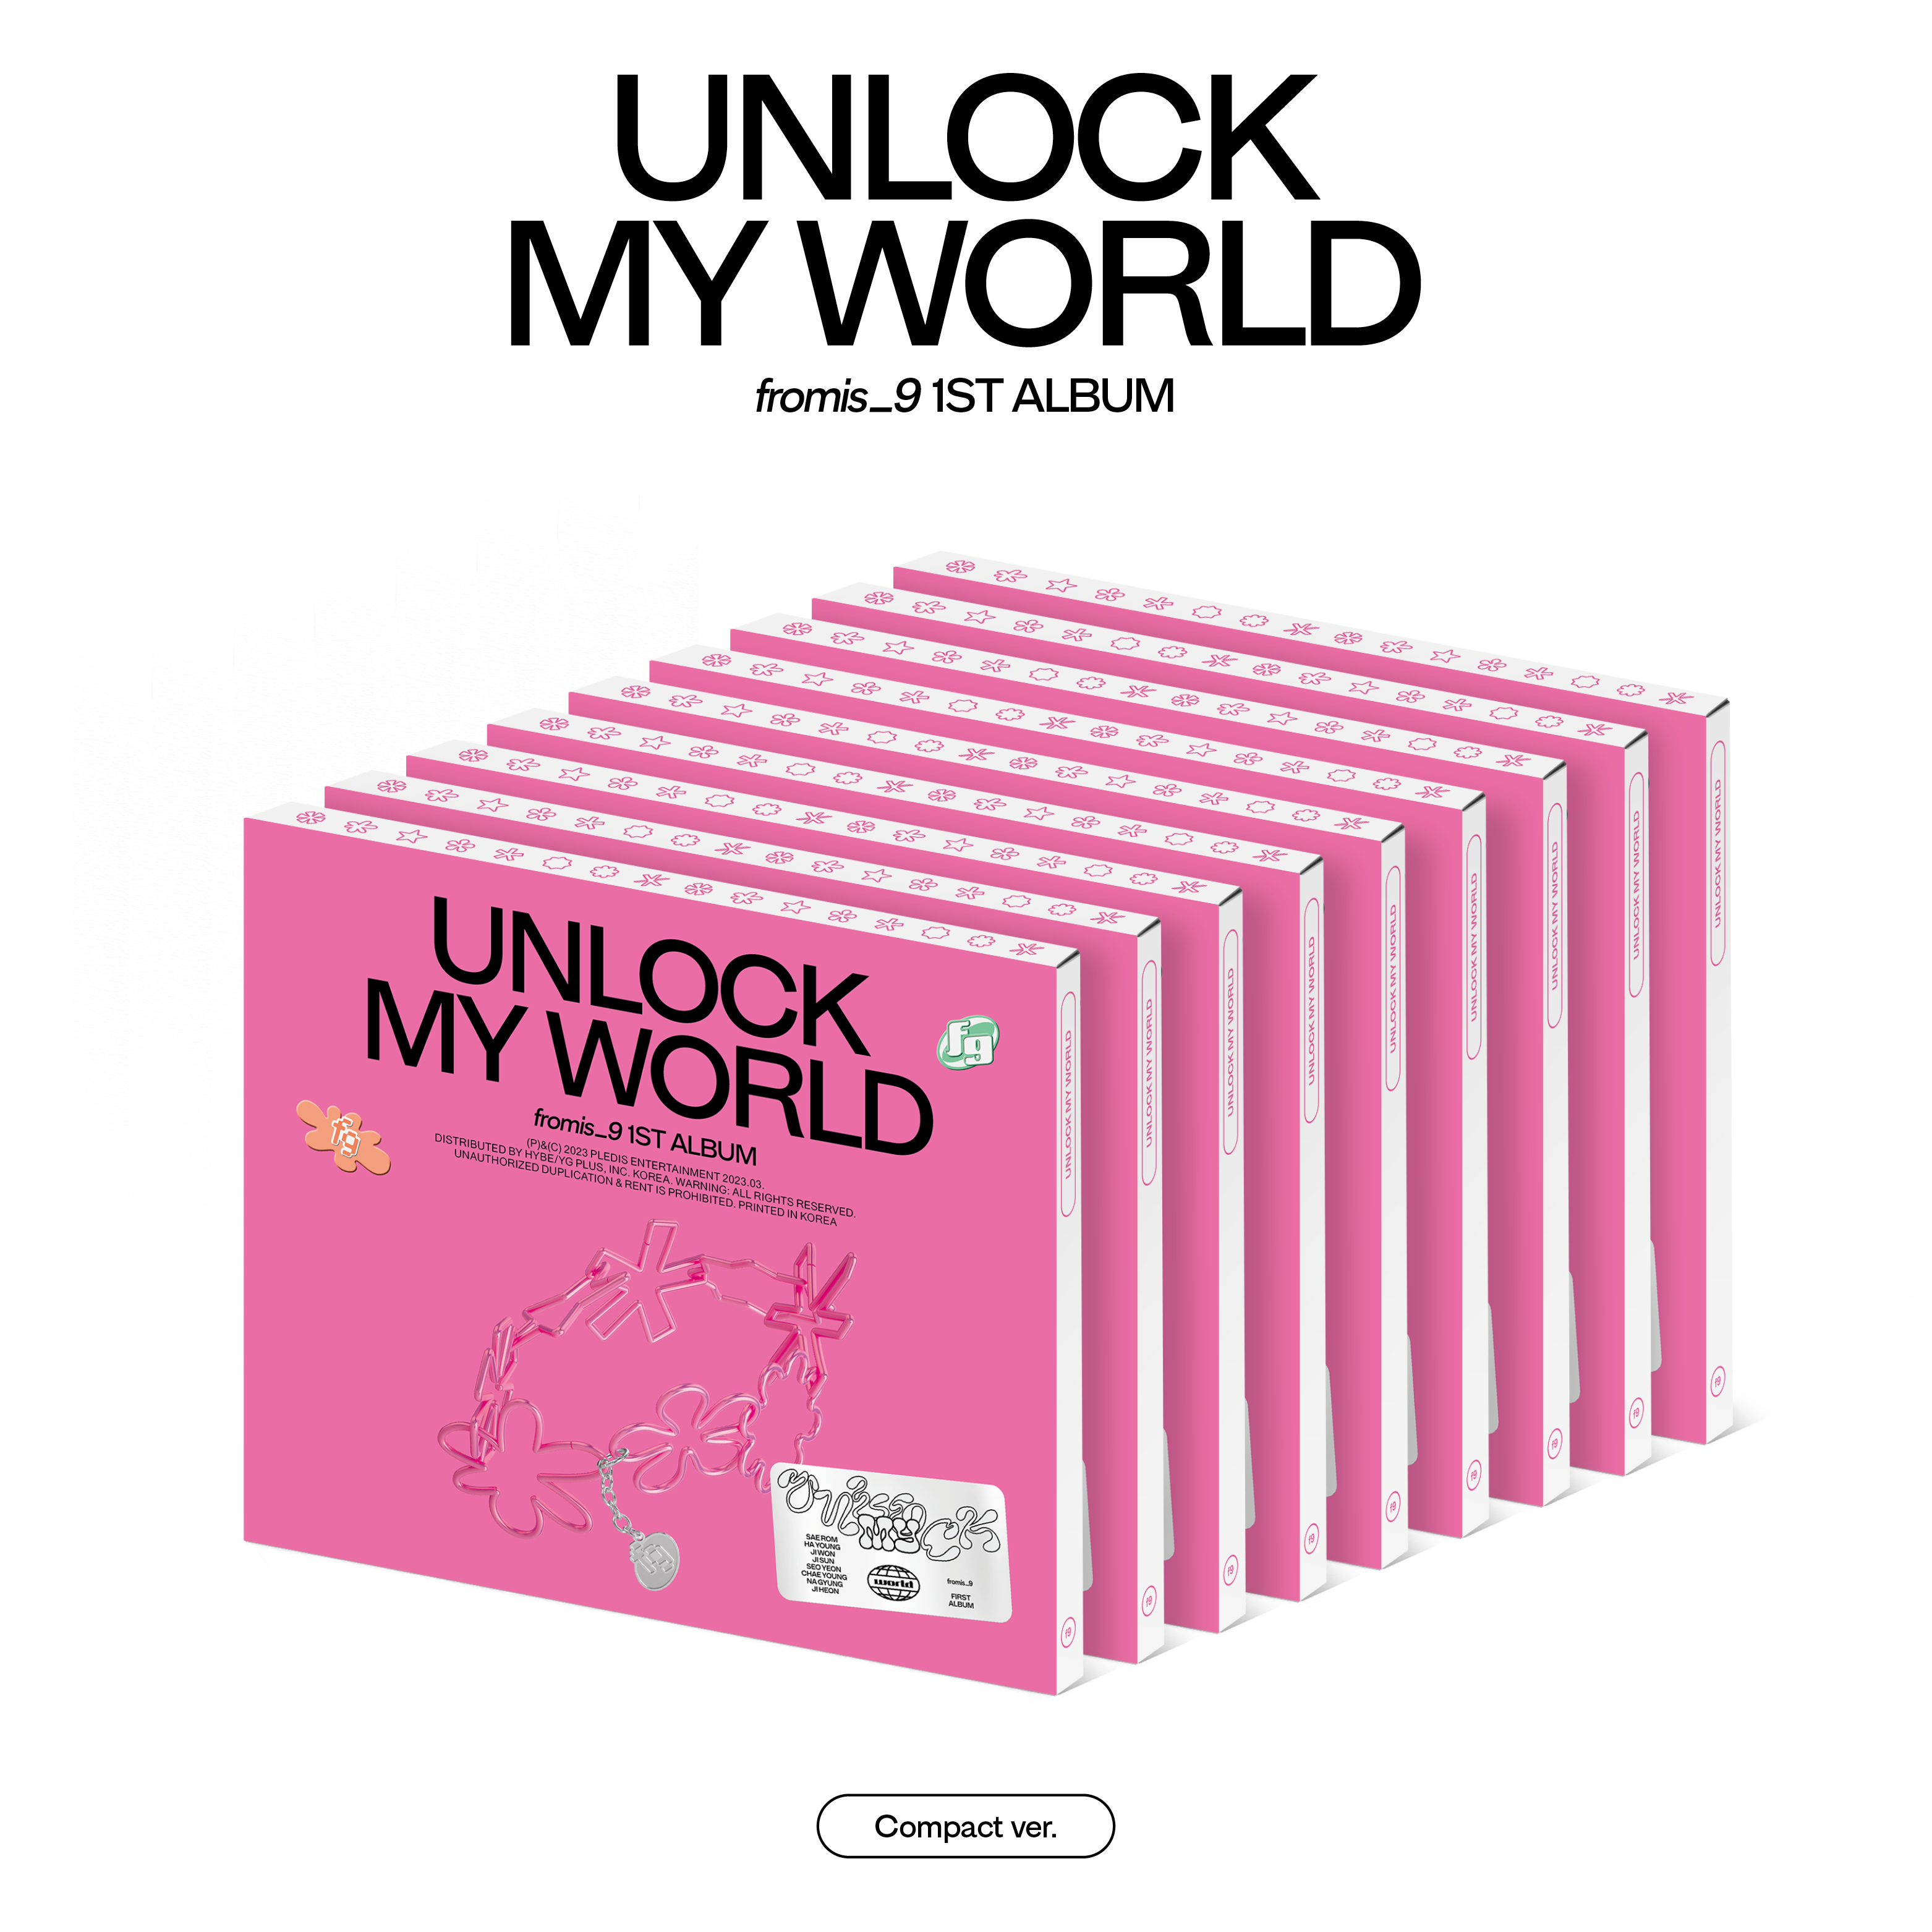 [Ktown4u Special Gift] [9CD SET] fromis_9 - 1st Album [Unlock My World] (Compact ver.) 